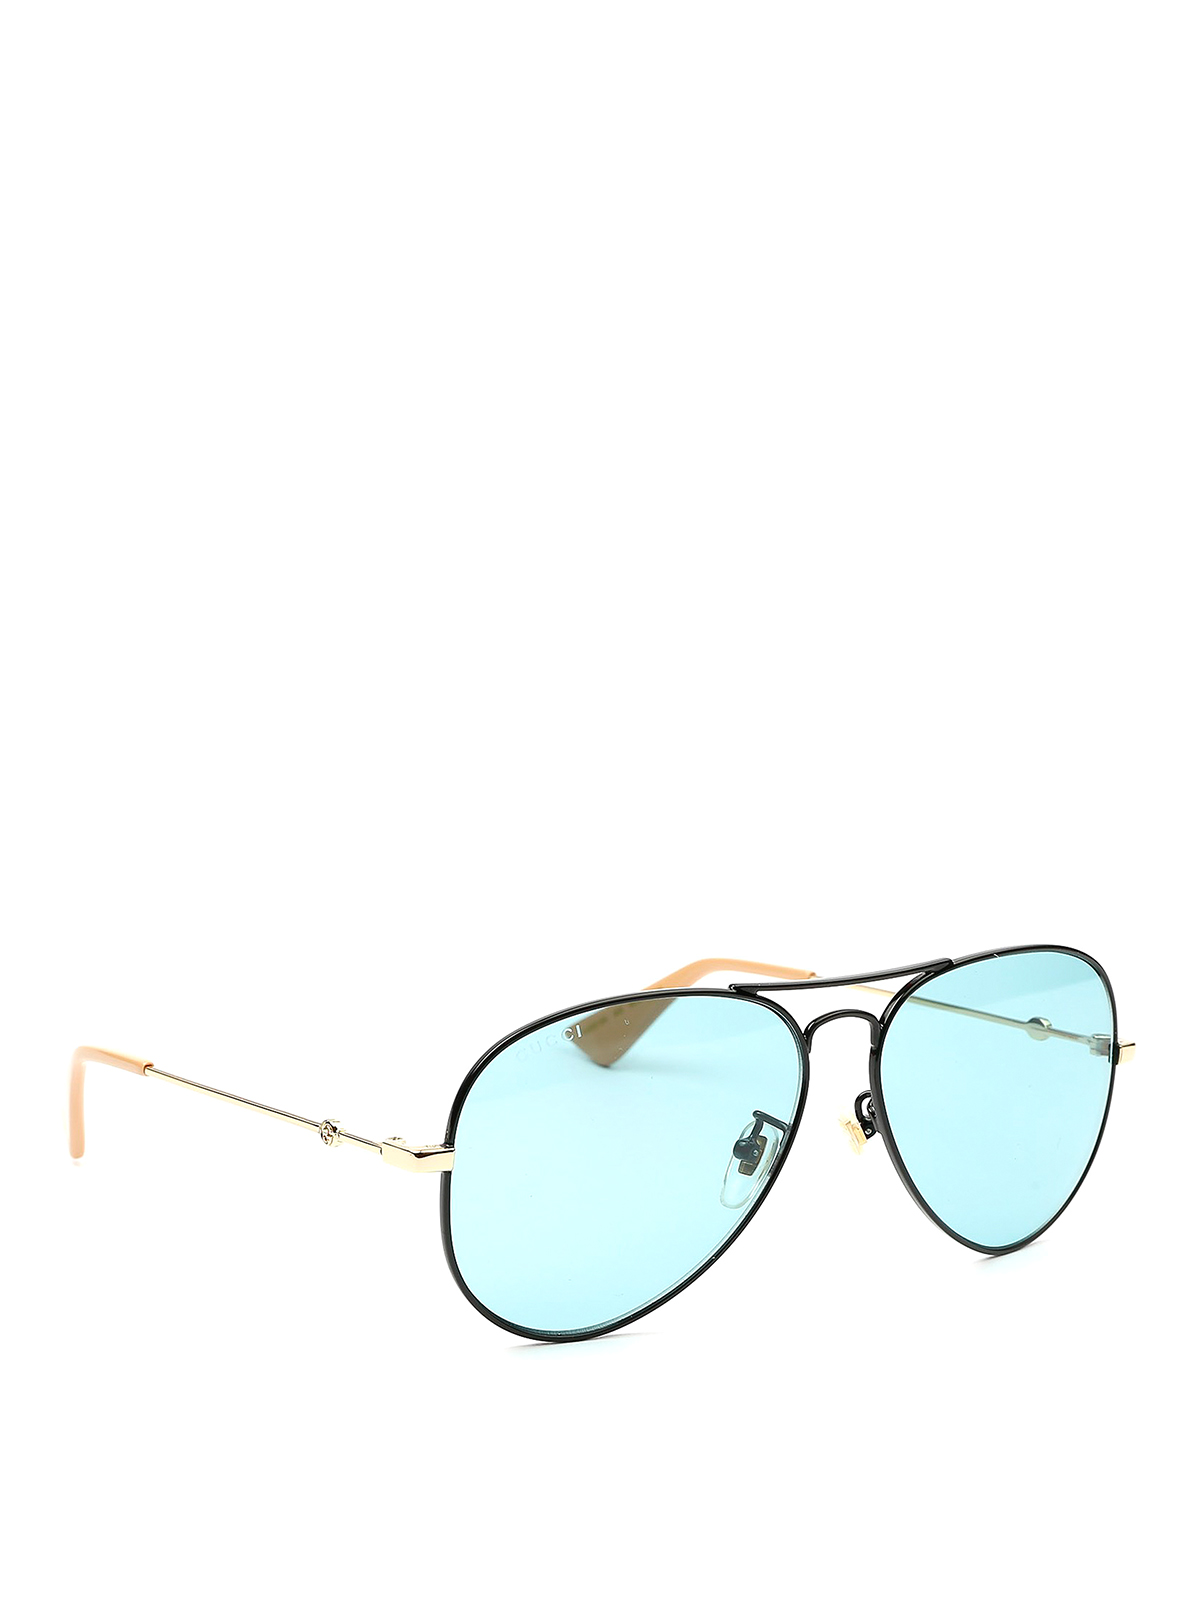 gucci light blue sunglasses